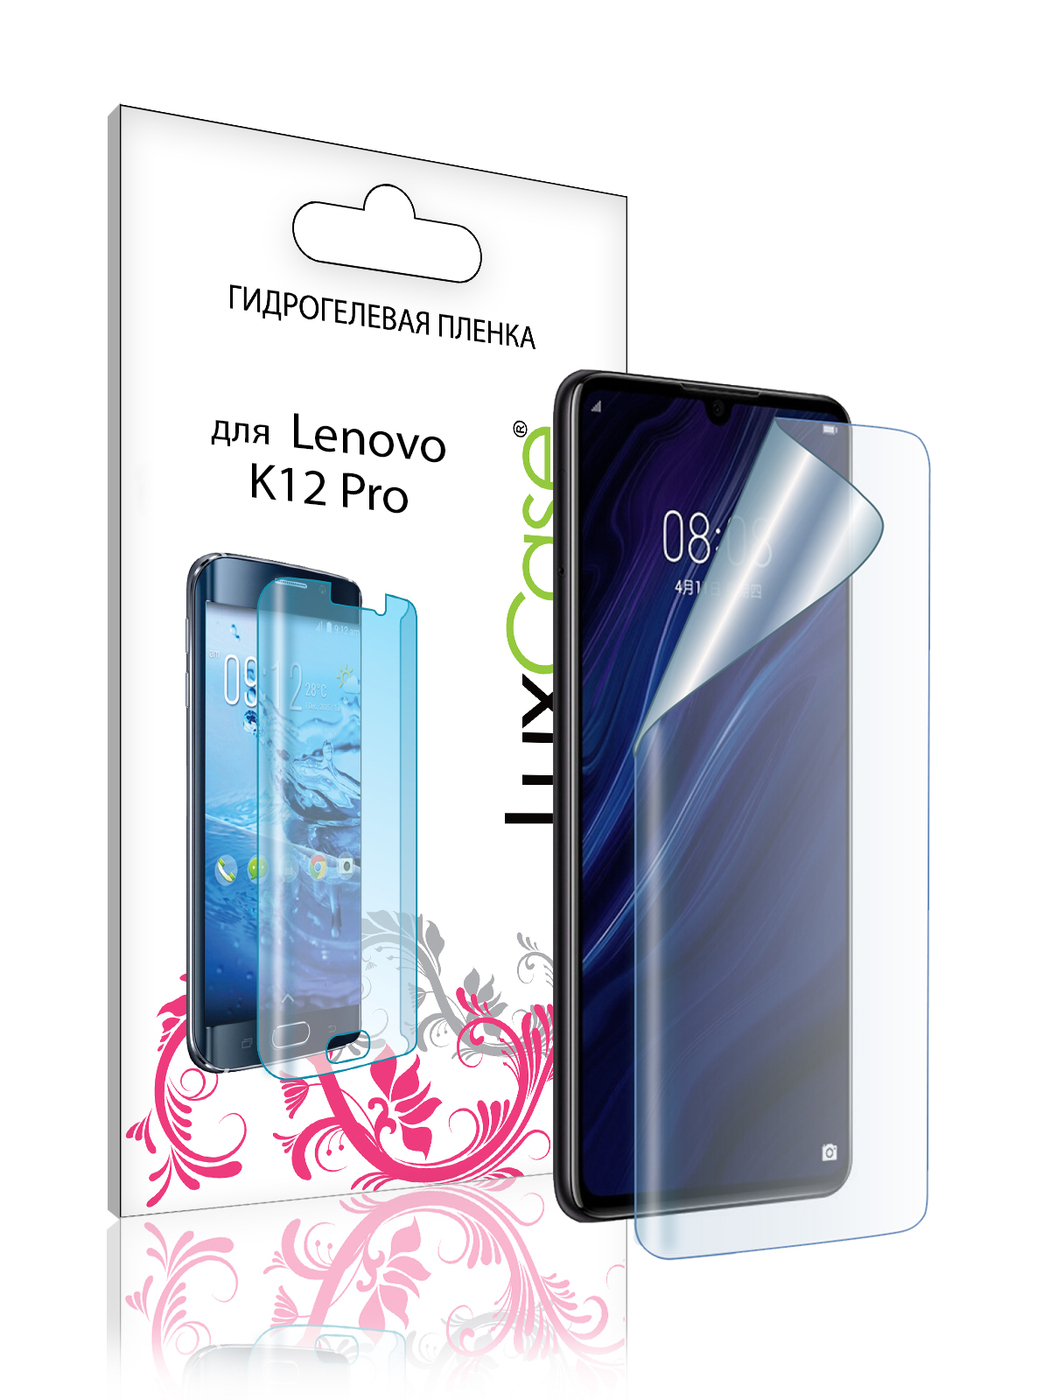 Пленка гидрогелевая LuxCase для Lenovo K12 Pro Front Transparent 86383 гидрогелевая пленка luxcase для lenovo k12 pro back transparent 86384